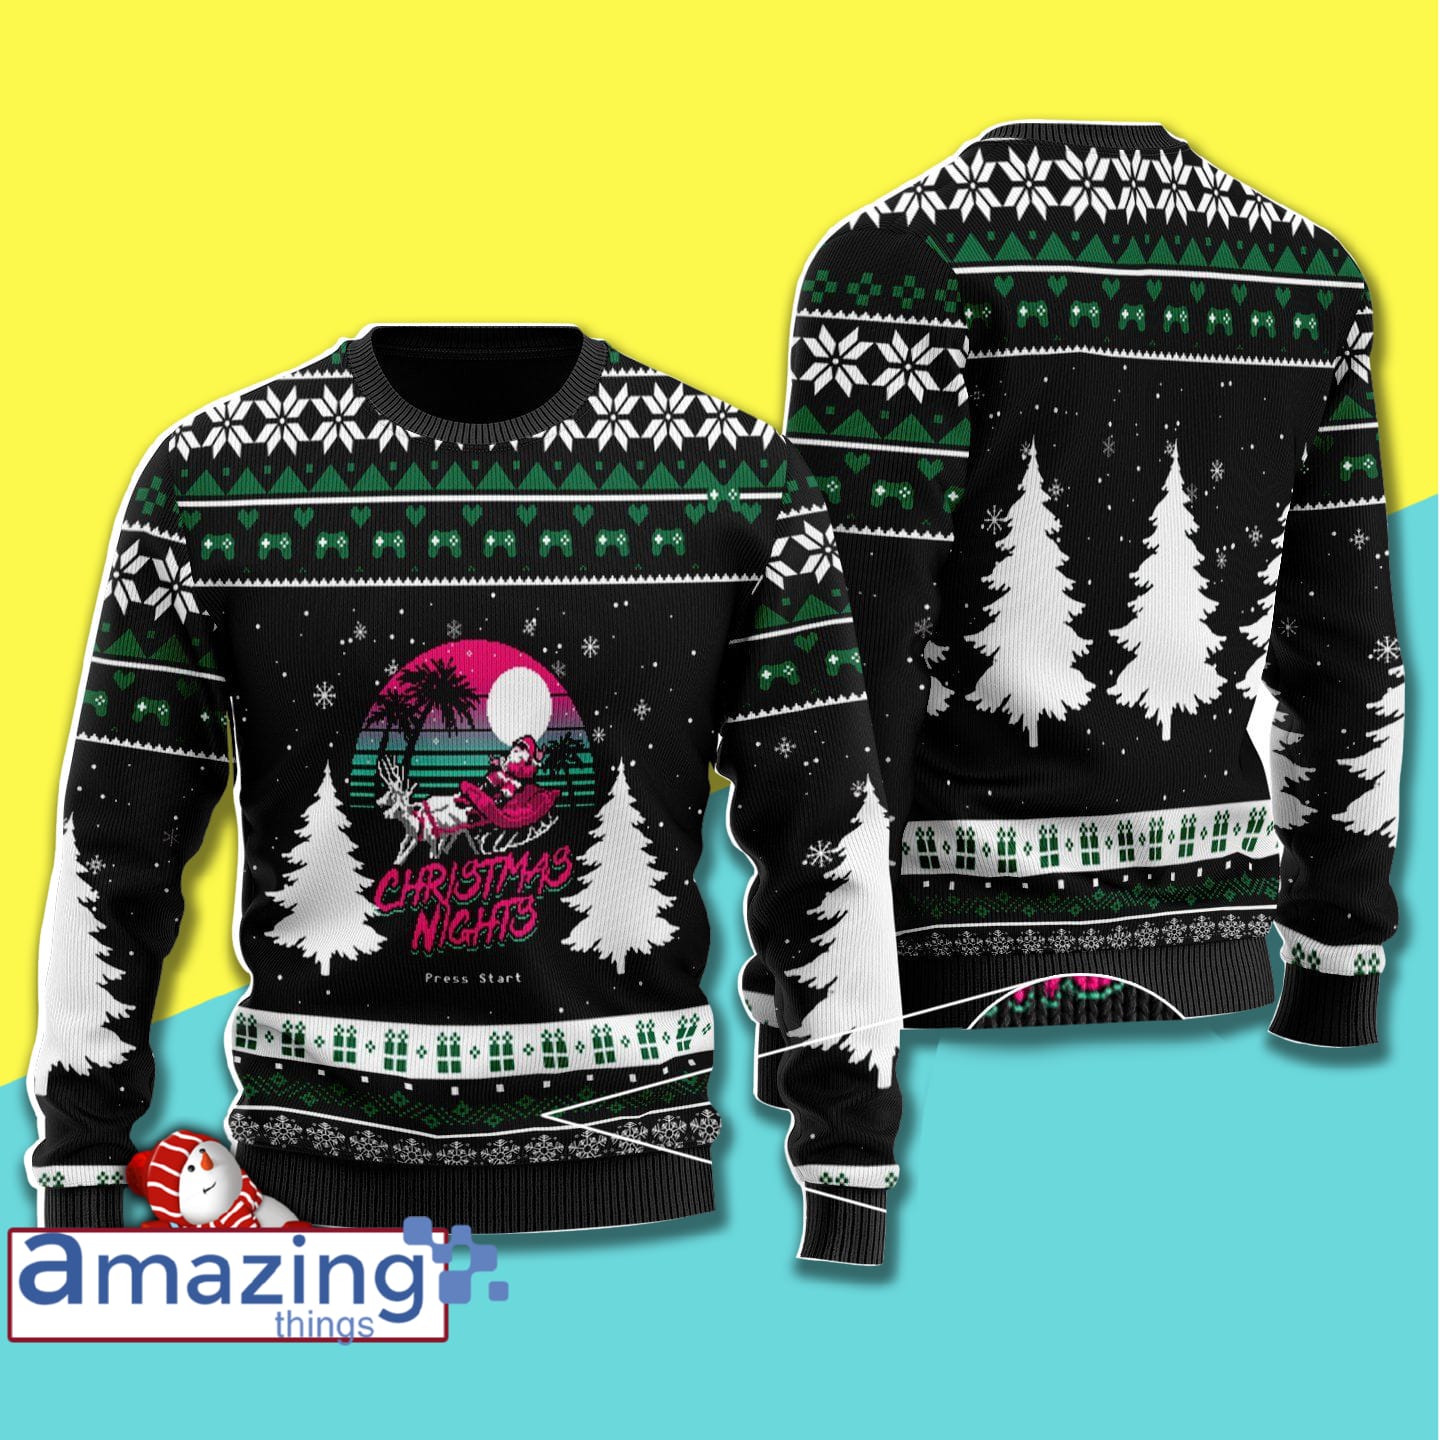 The Retro Vintage Wool Knitting Pattern Christmas Ugly Sweater Sweatshirt